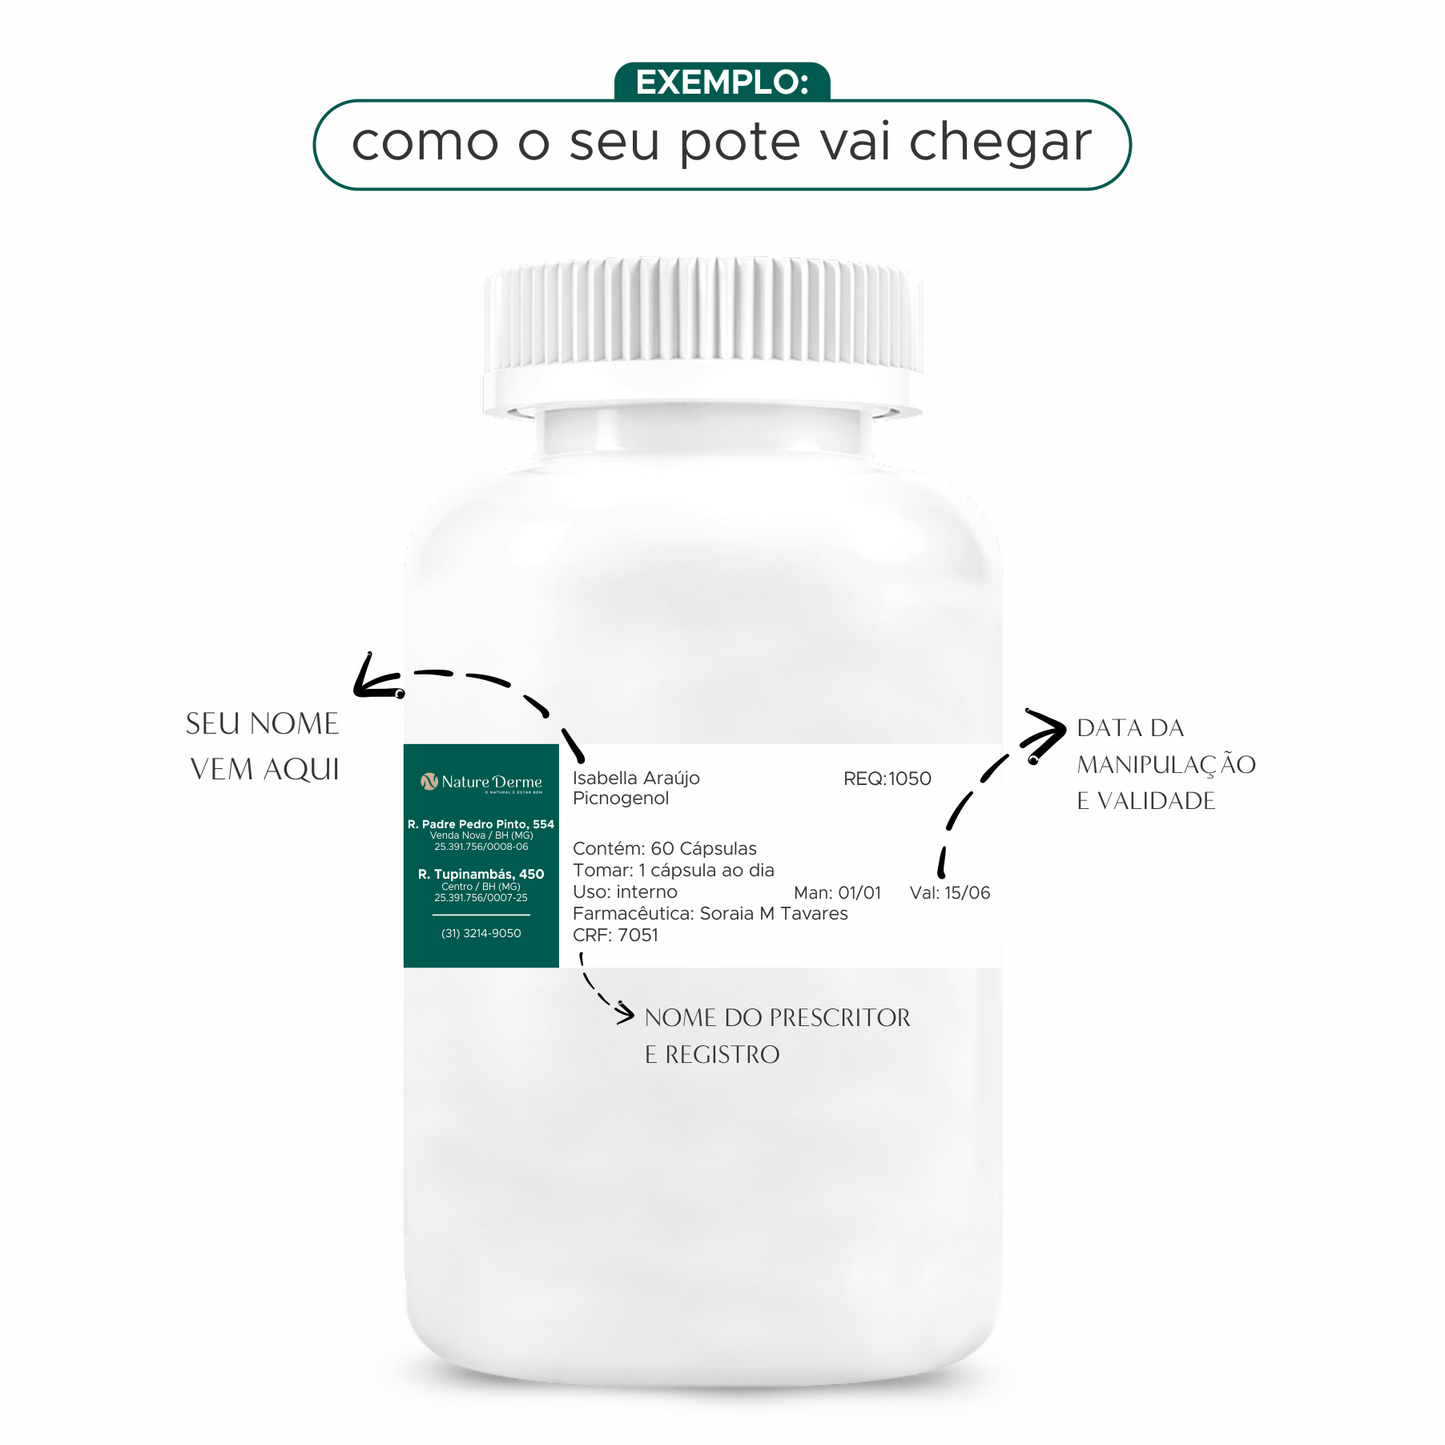 Coenzima Q10 100mg -  Antioxidante + Energia